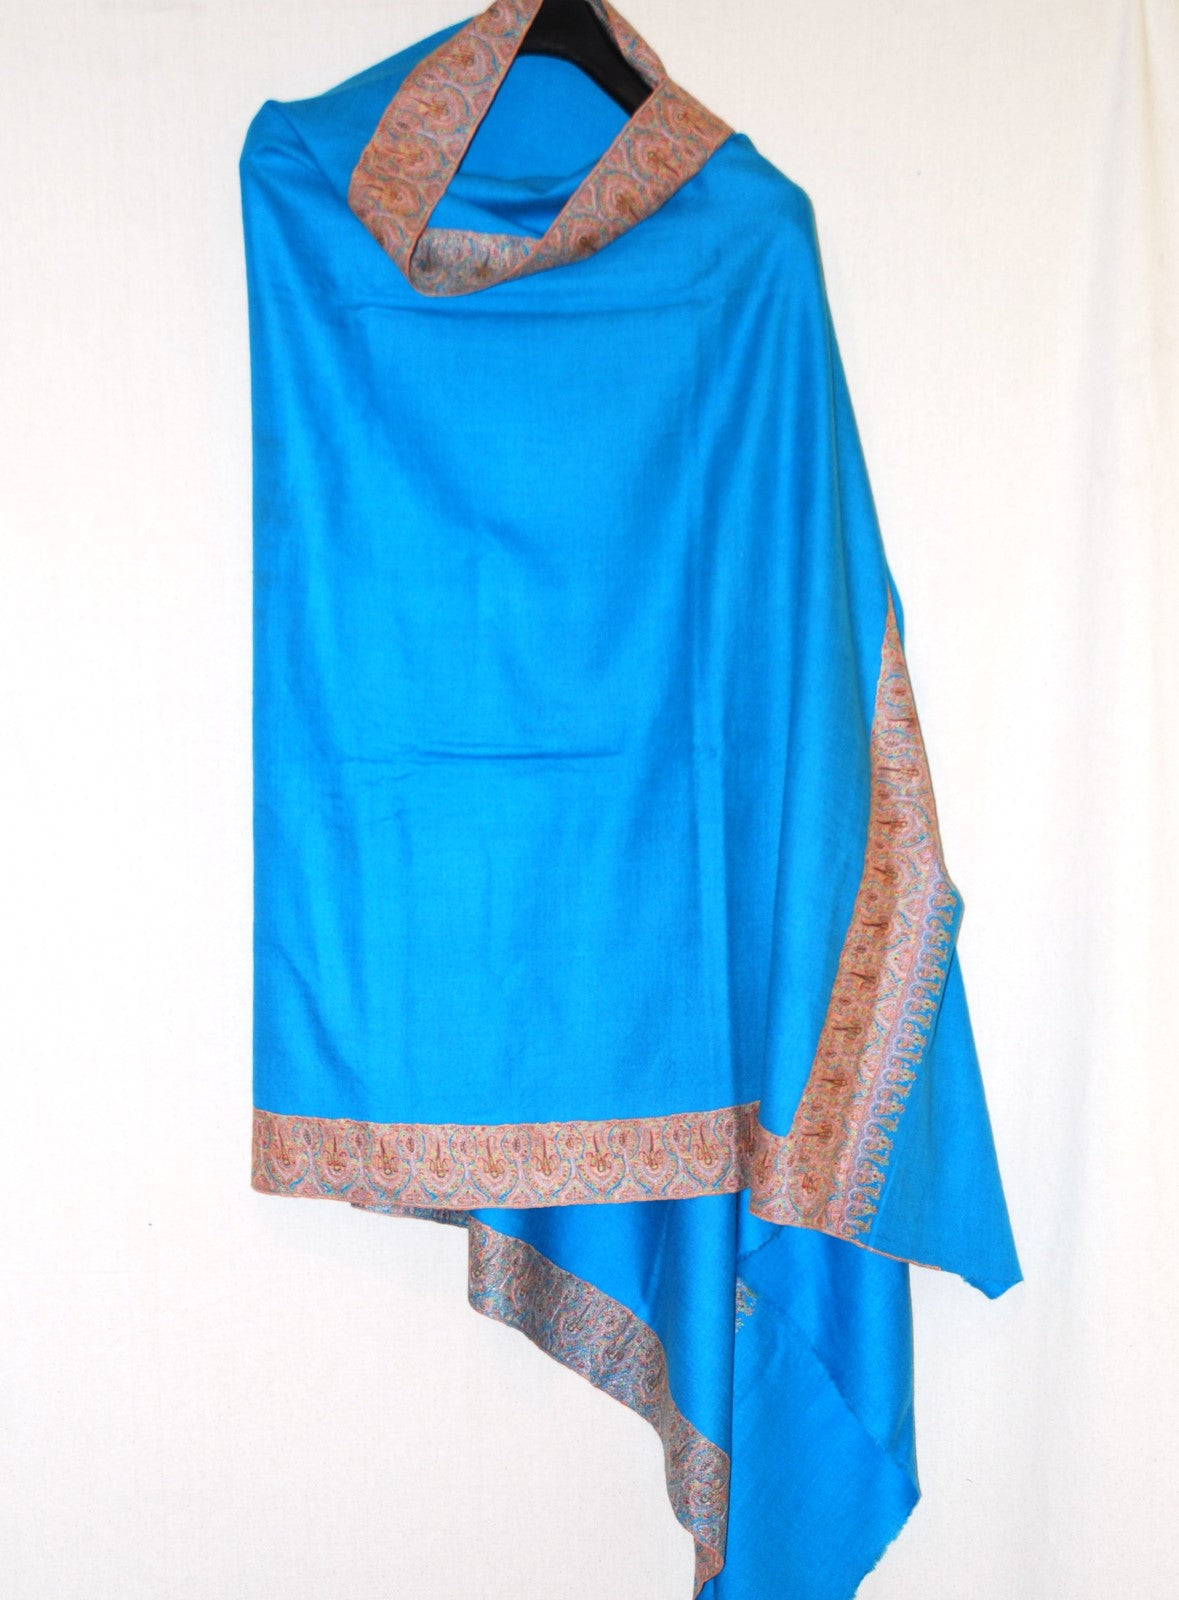 Kashmir Pashmina "Cashmere" Shawl Sky Blue, Multicolor Embroidery #PDR-012